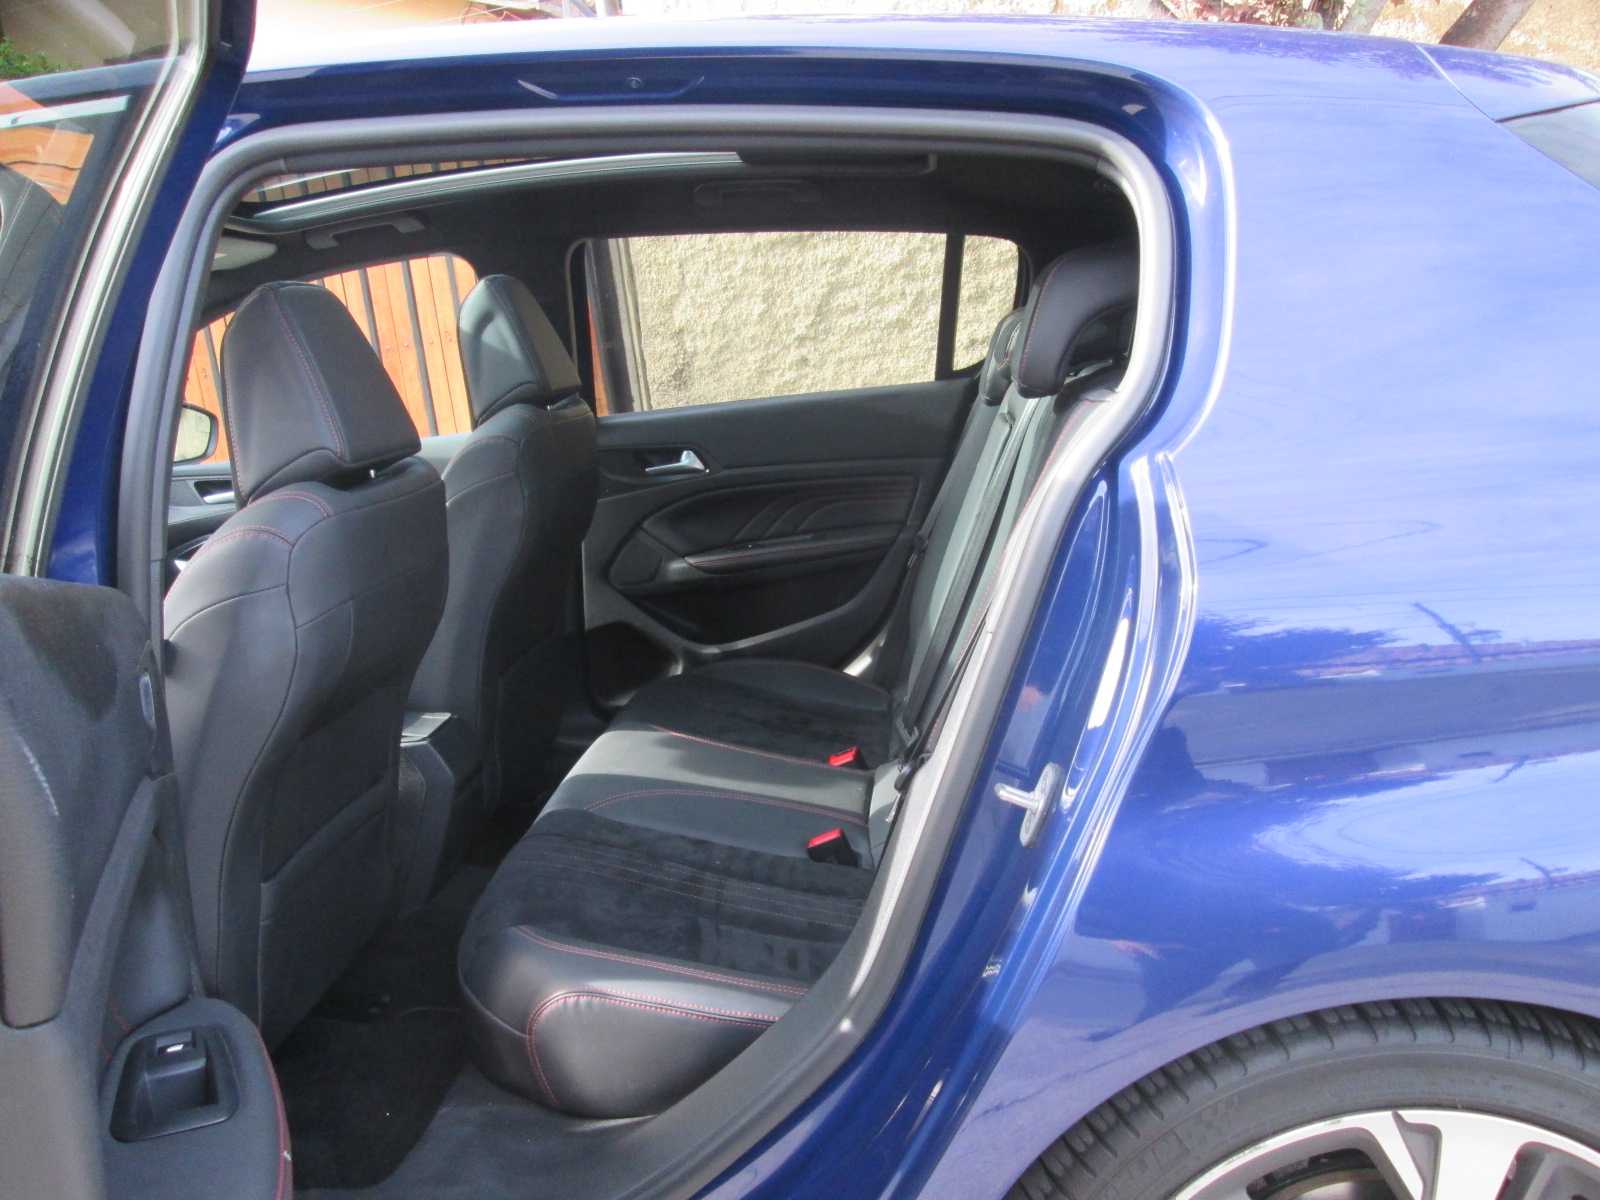 Peugeot 308 GT 2.0 Blue HDi 2016 Test Drive Rutamotor (17)